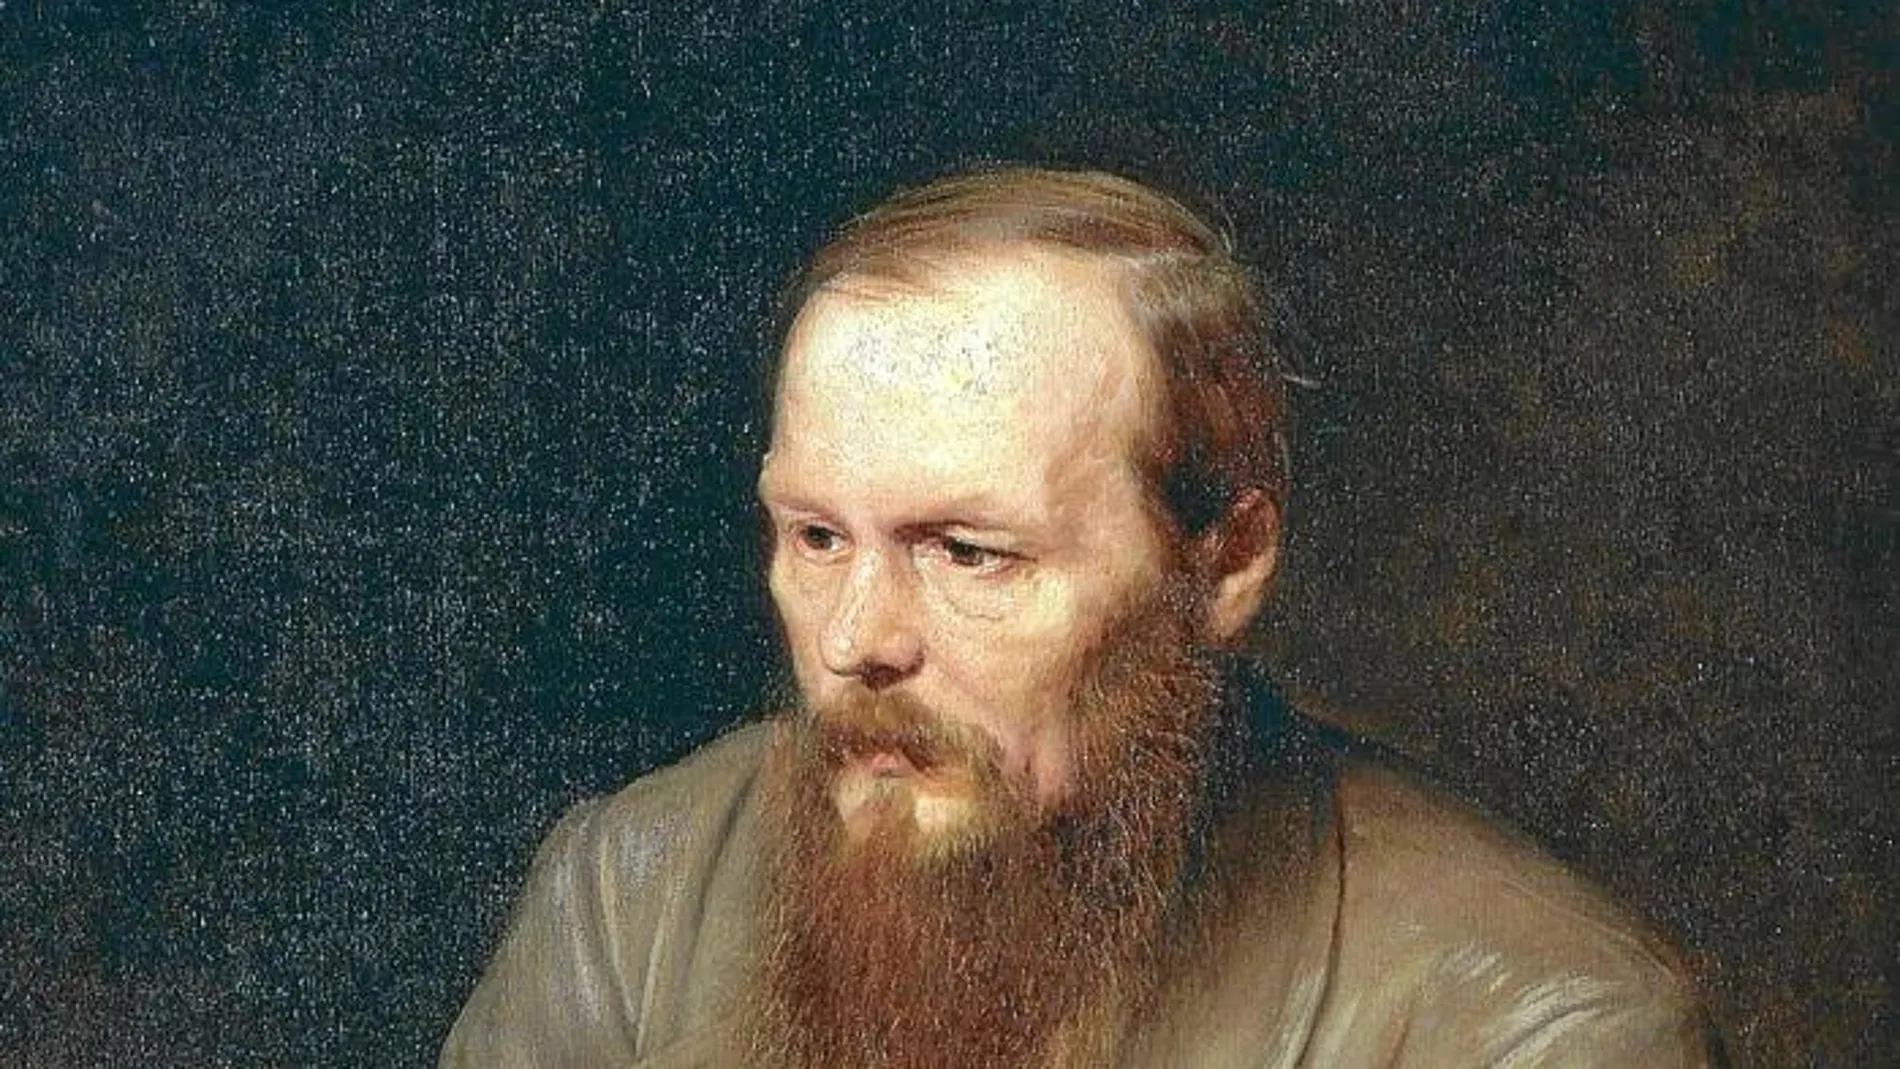 Vasily Perov pintó a Dostoievski en 1872